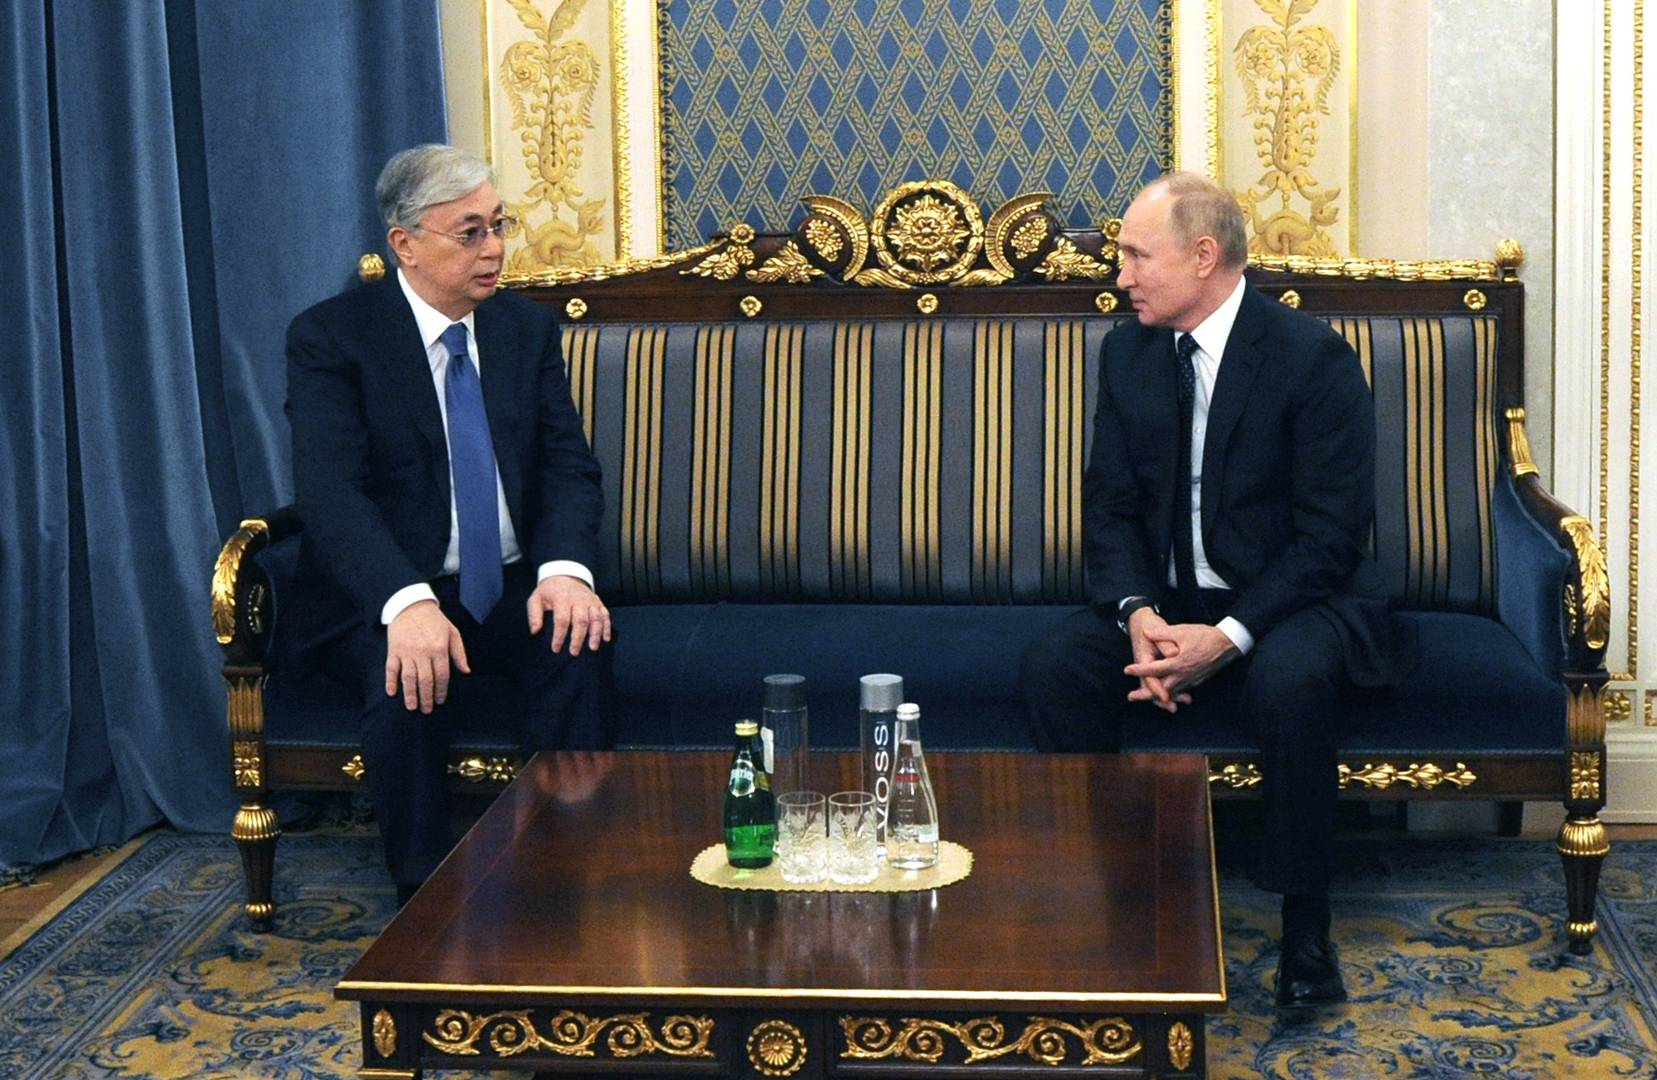 Встреча президента России В. Путина и главы Казахстана К. Токаева на полях саммита лидеров стран СНГ